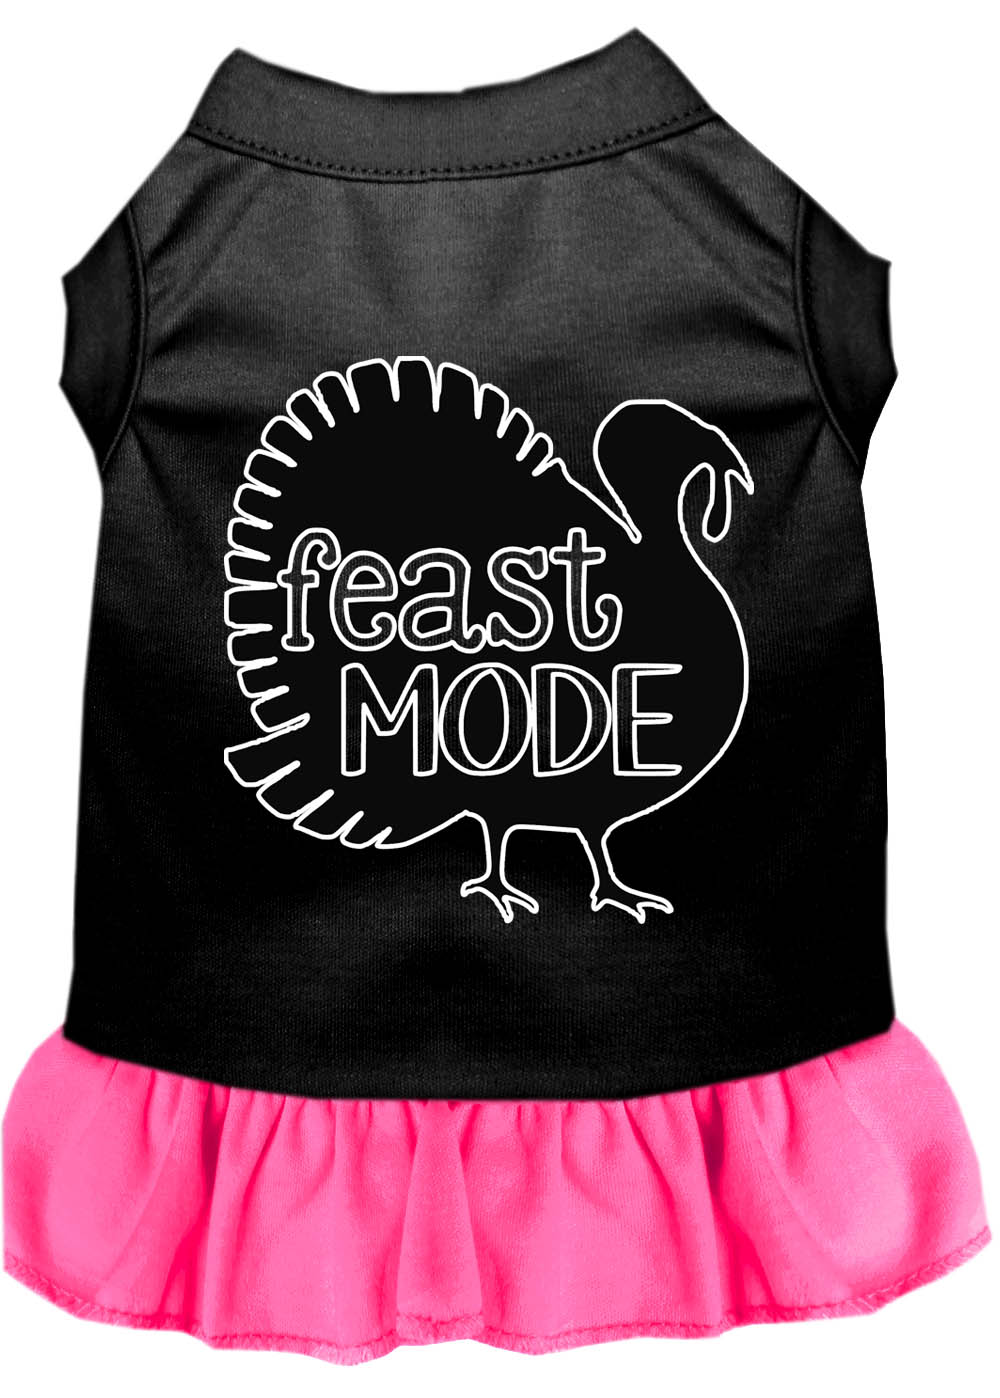 Feast Mode Screen Print Dog Dress Black with Bright Pink Lg